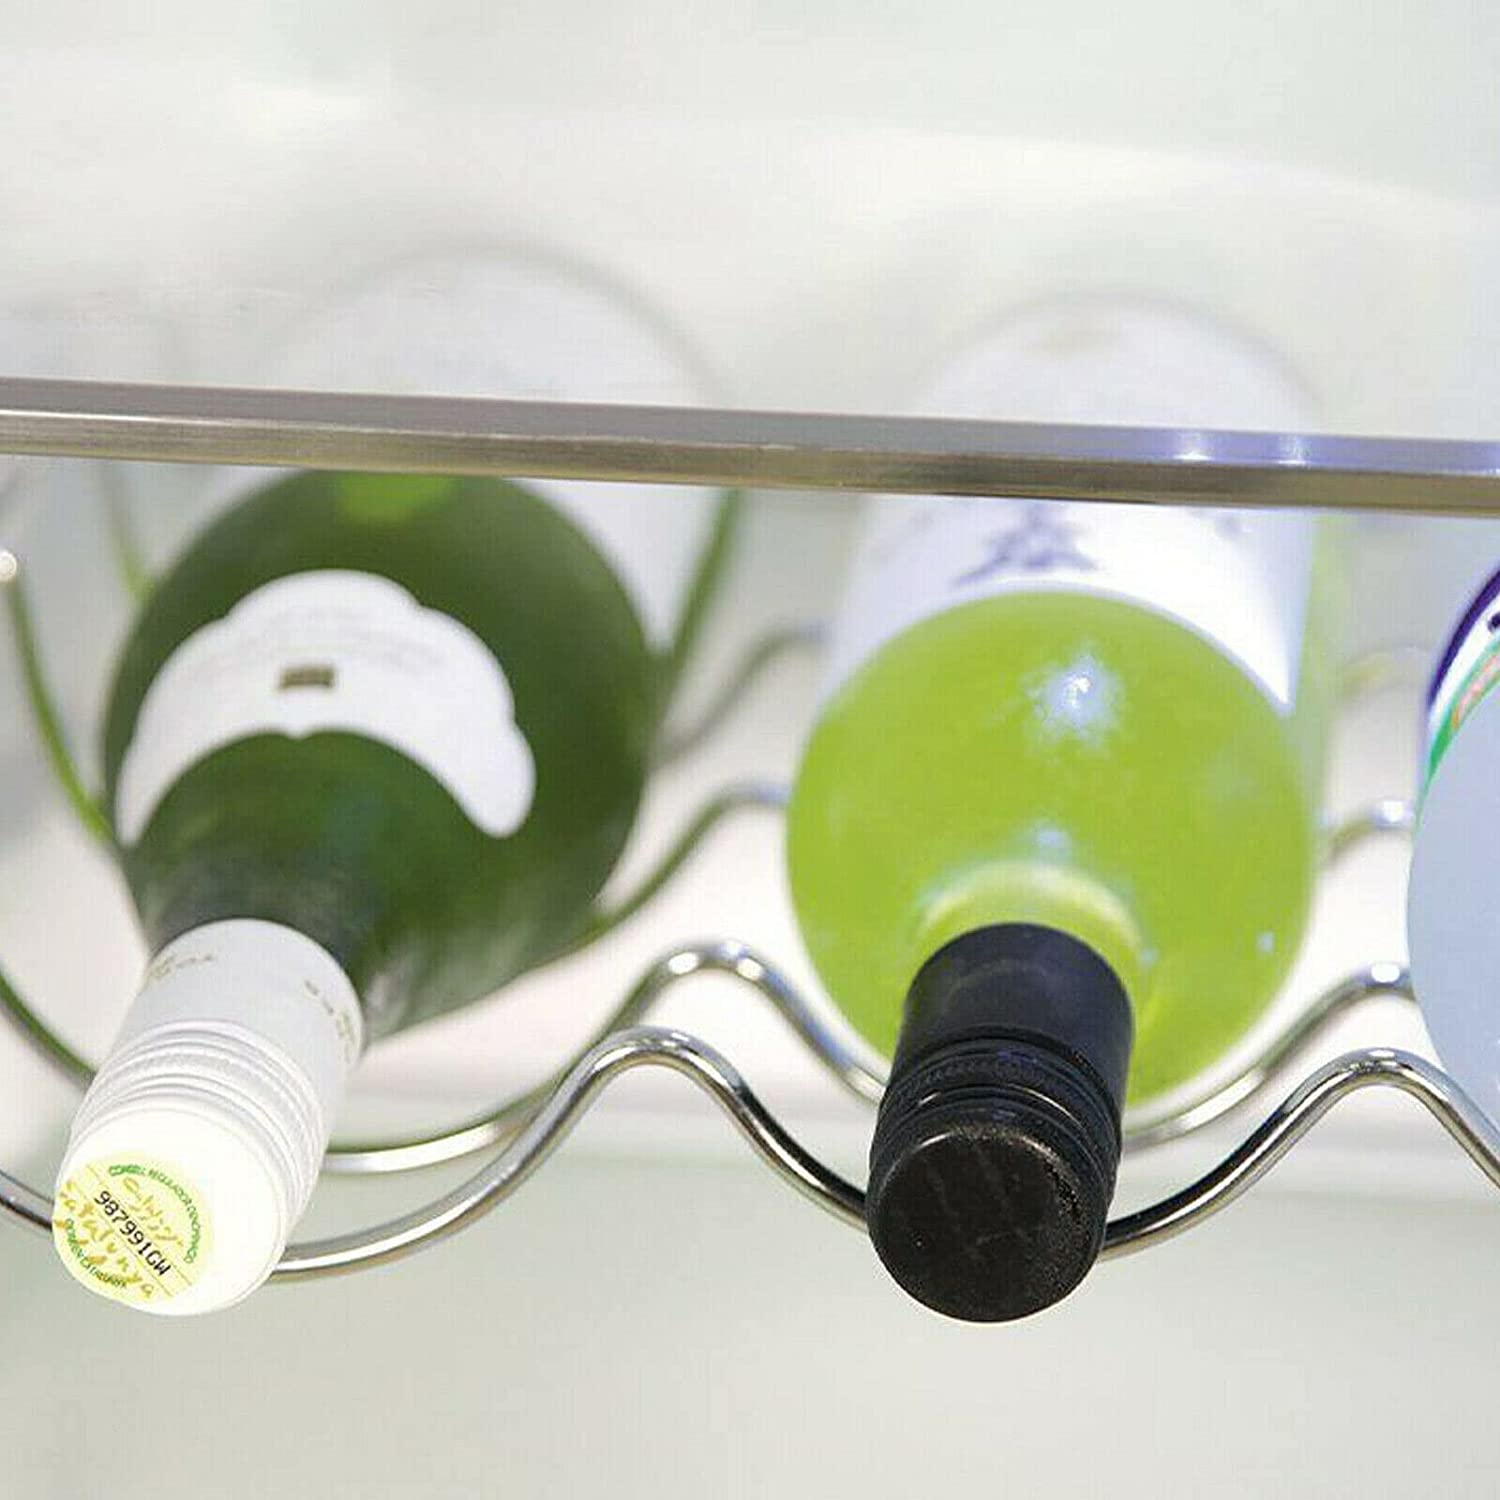 Wine Bottle Rack Shelf Insert compatible with Belling Fridge (460 x 290 x 70mm)